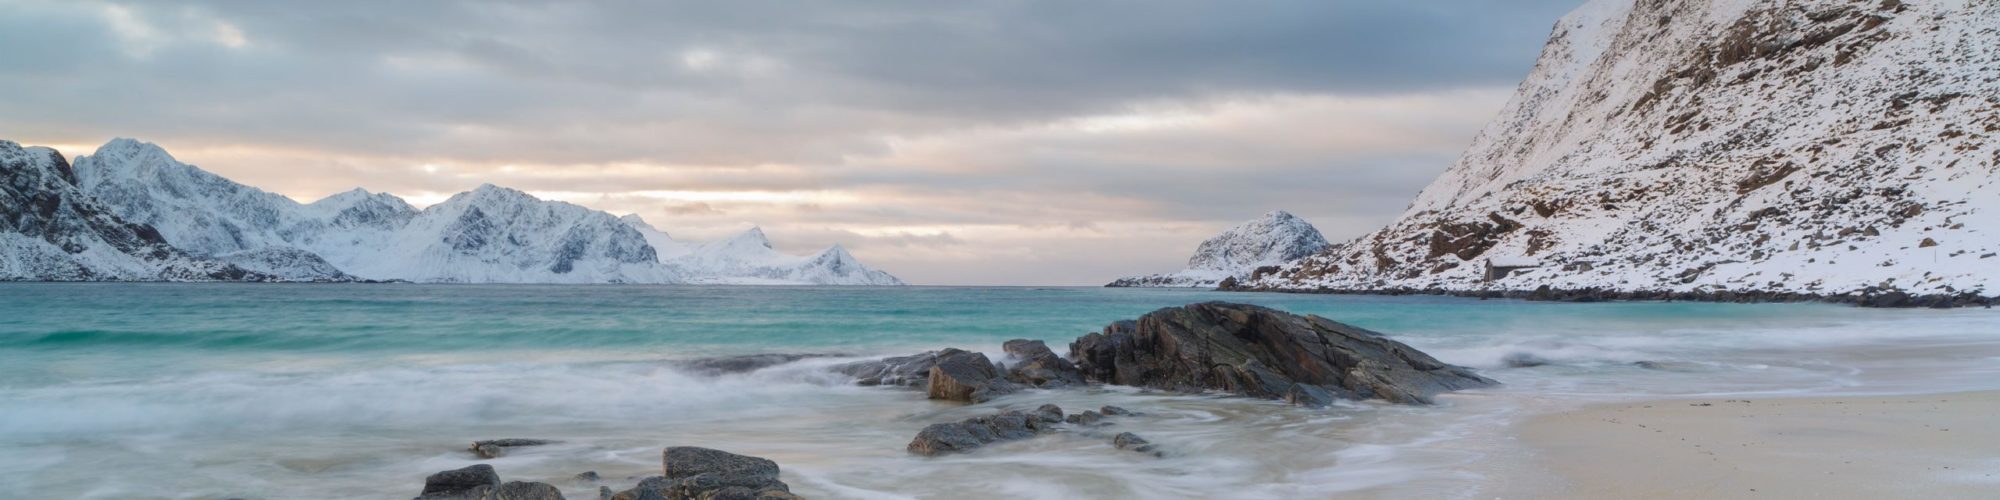 Lofoten Islands travel agents packages deals